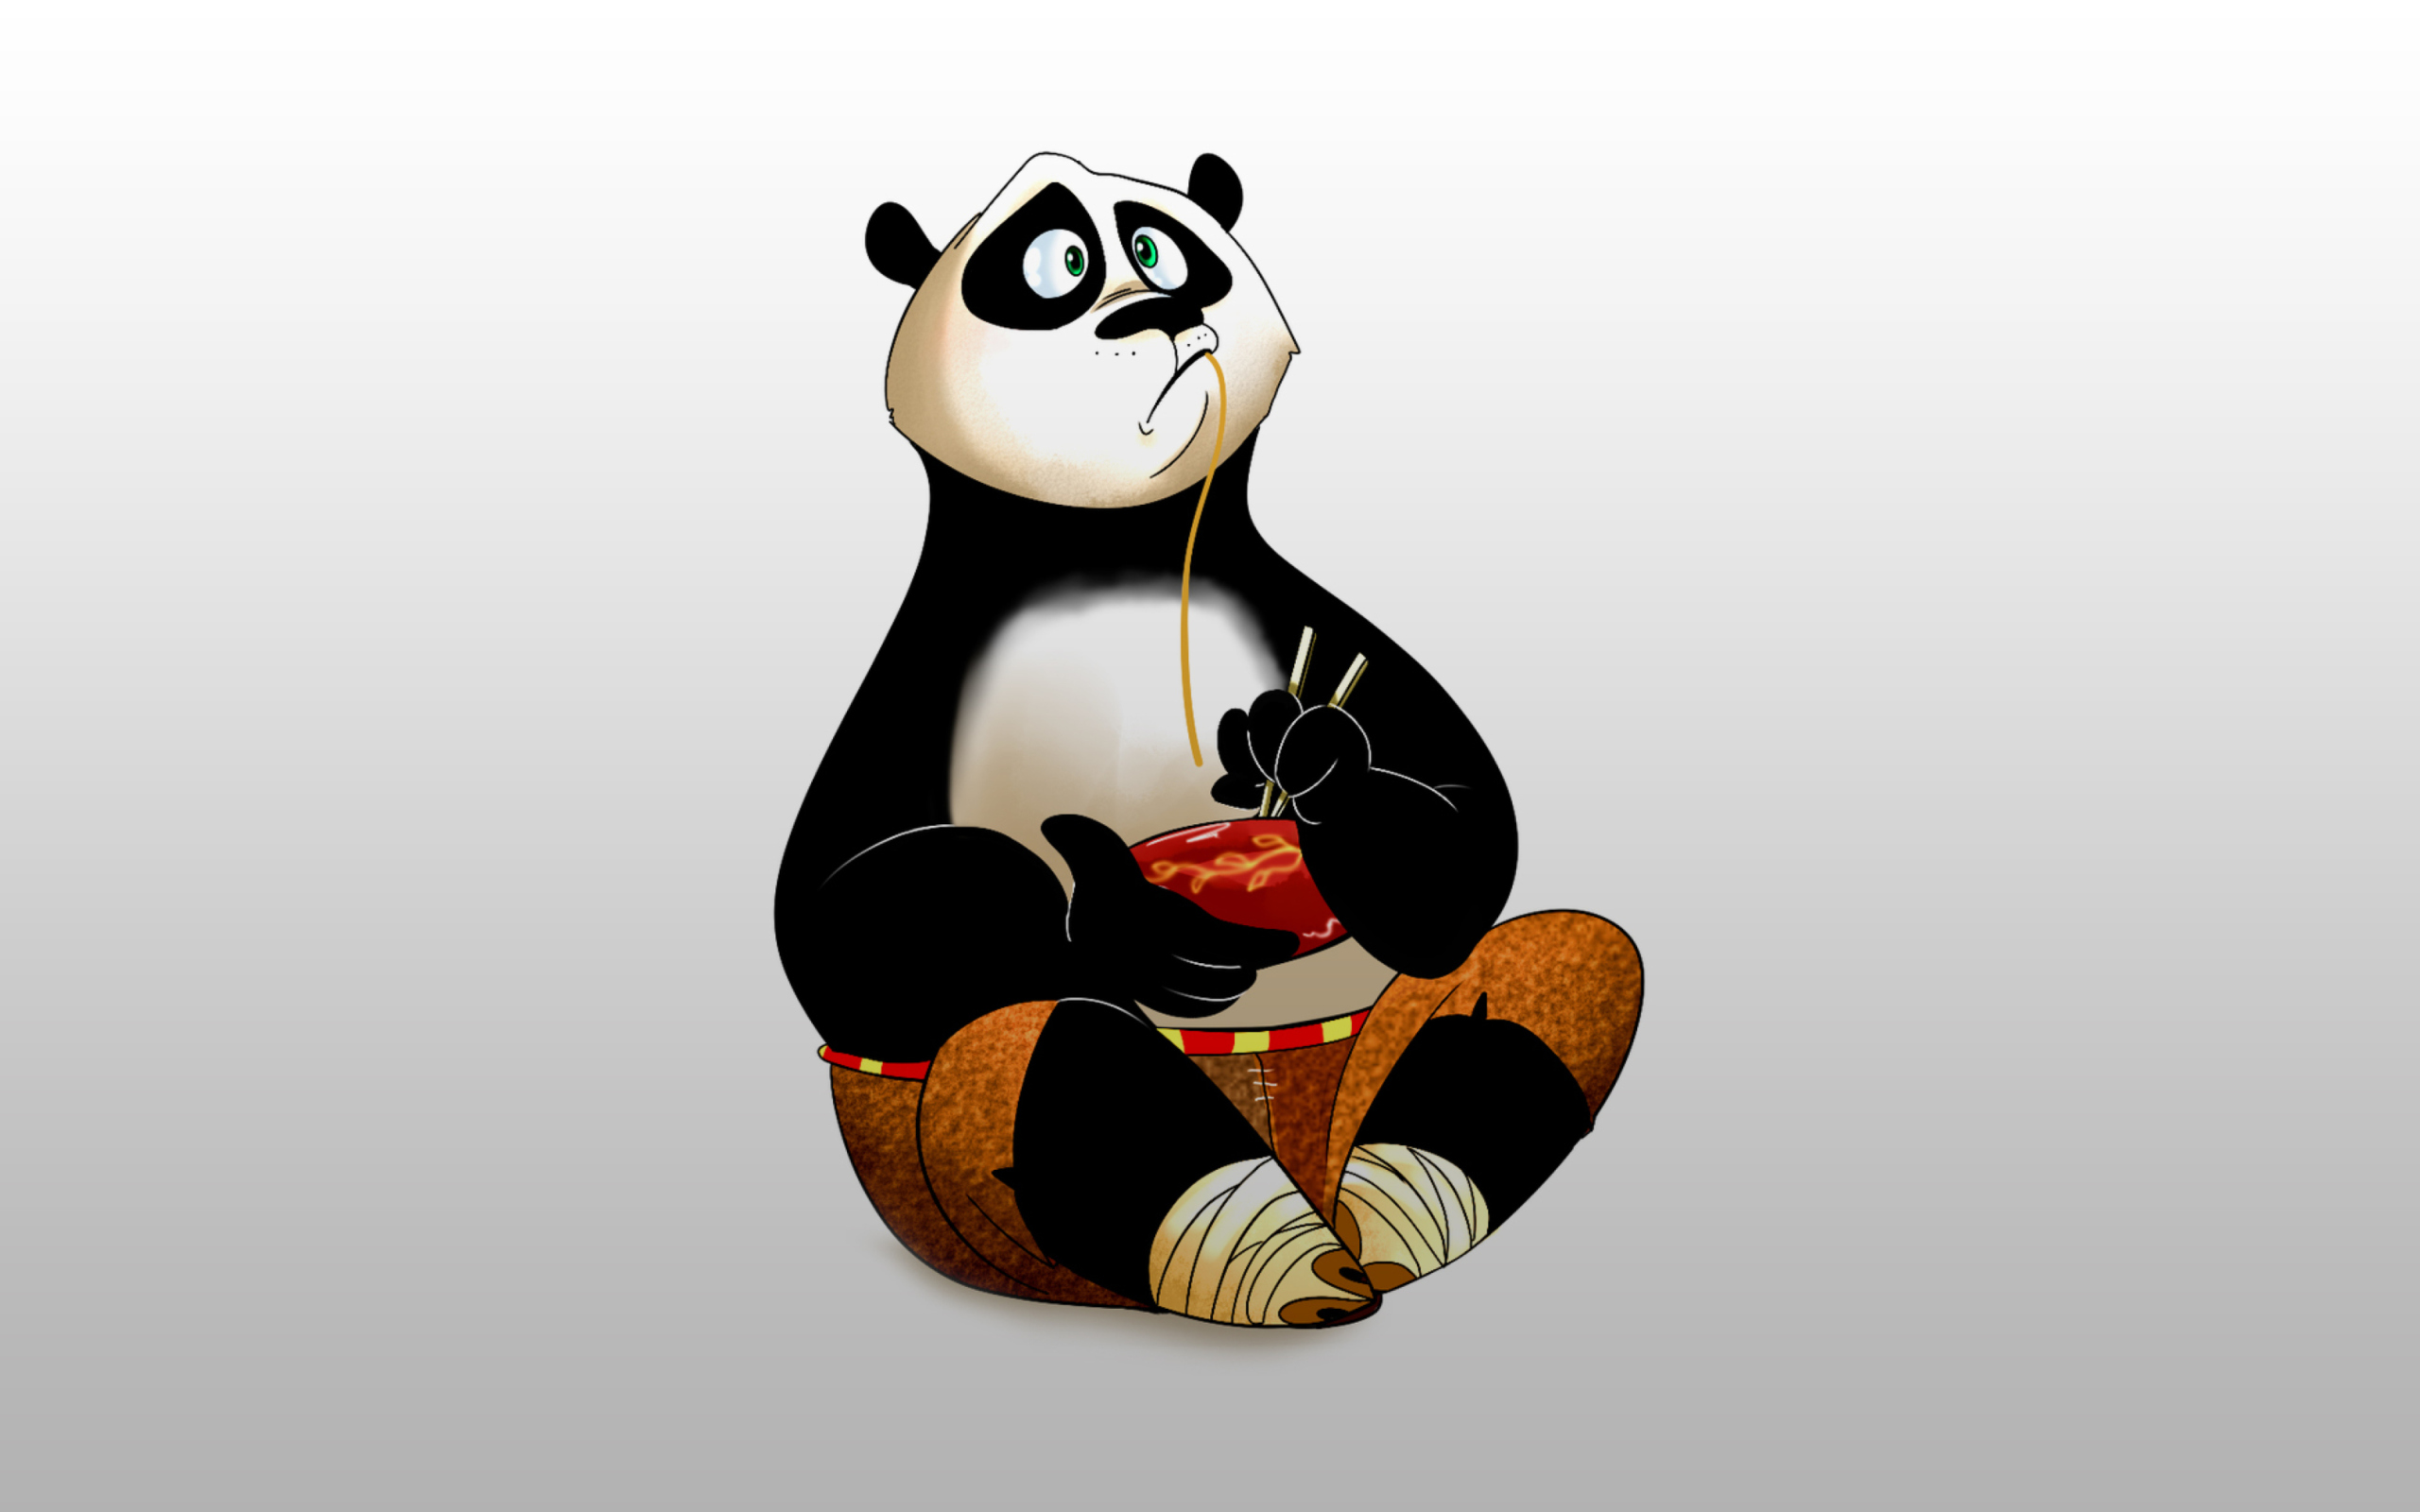 Das Kung Fu Panda Wallpaper 2560x1600